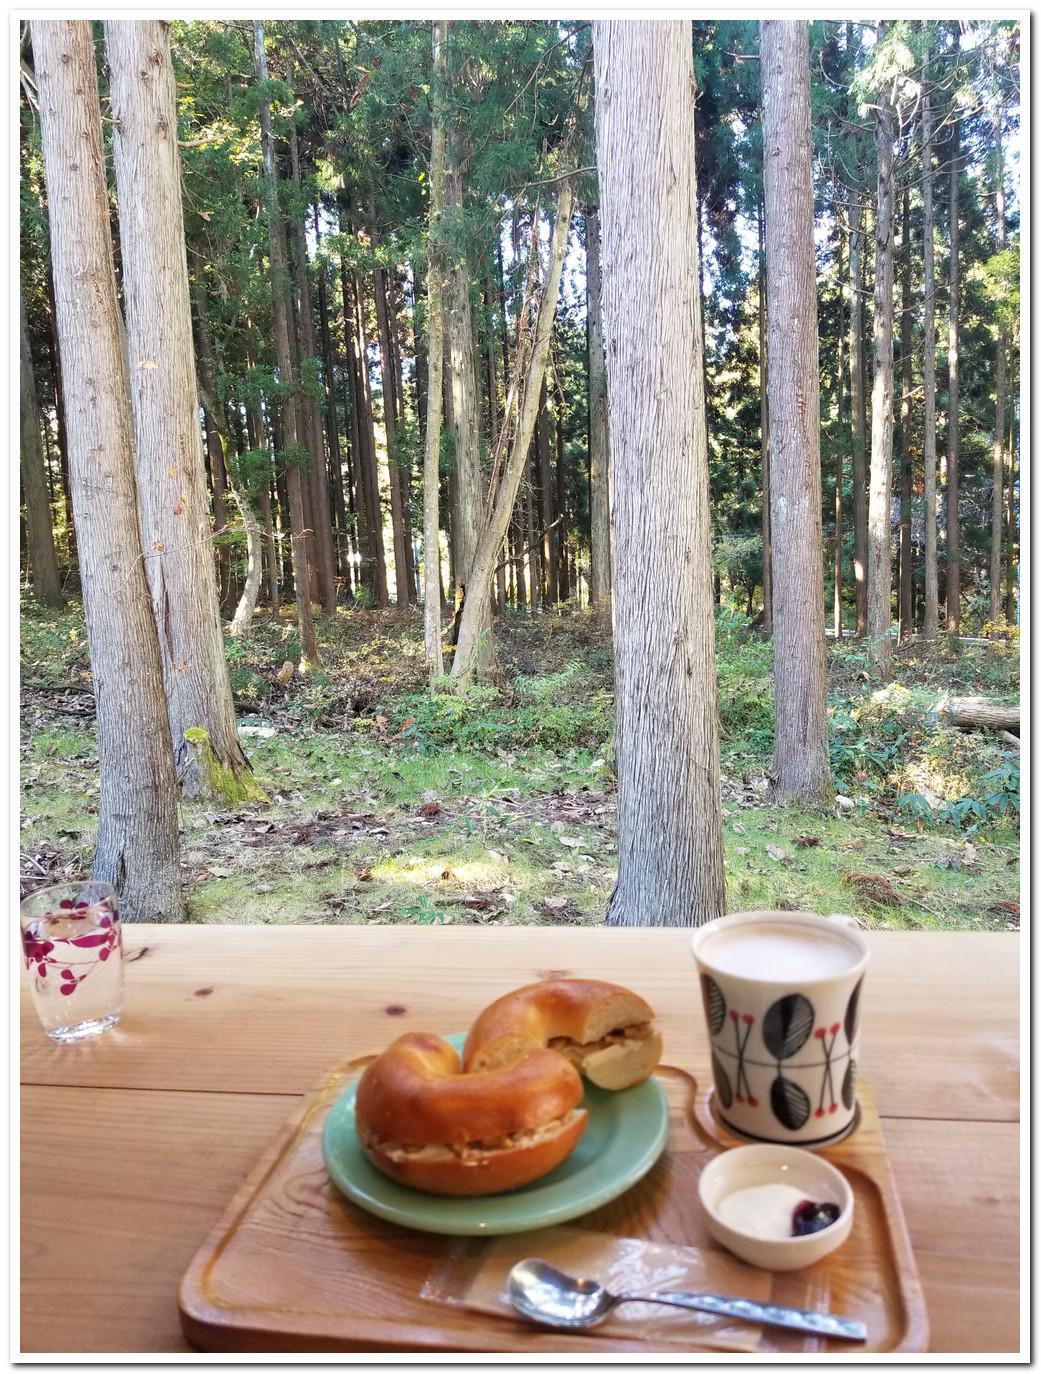 Cafe mori forest Torimi Cafe